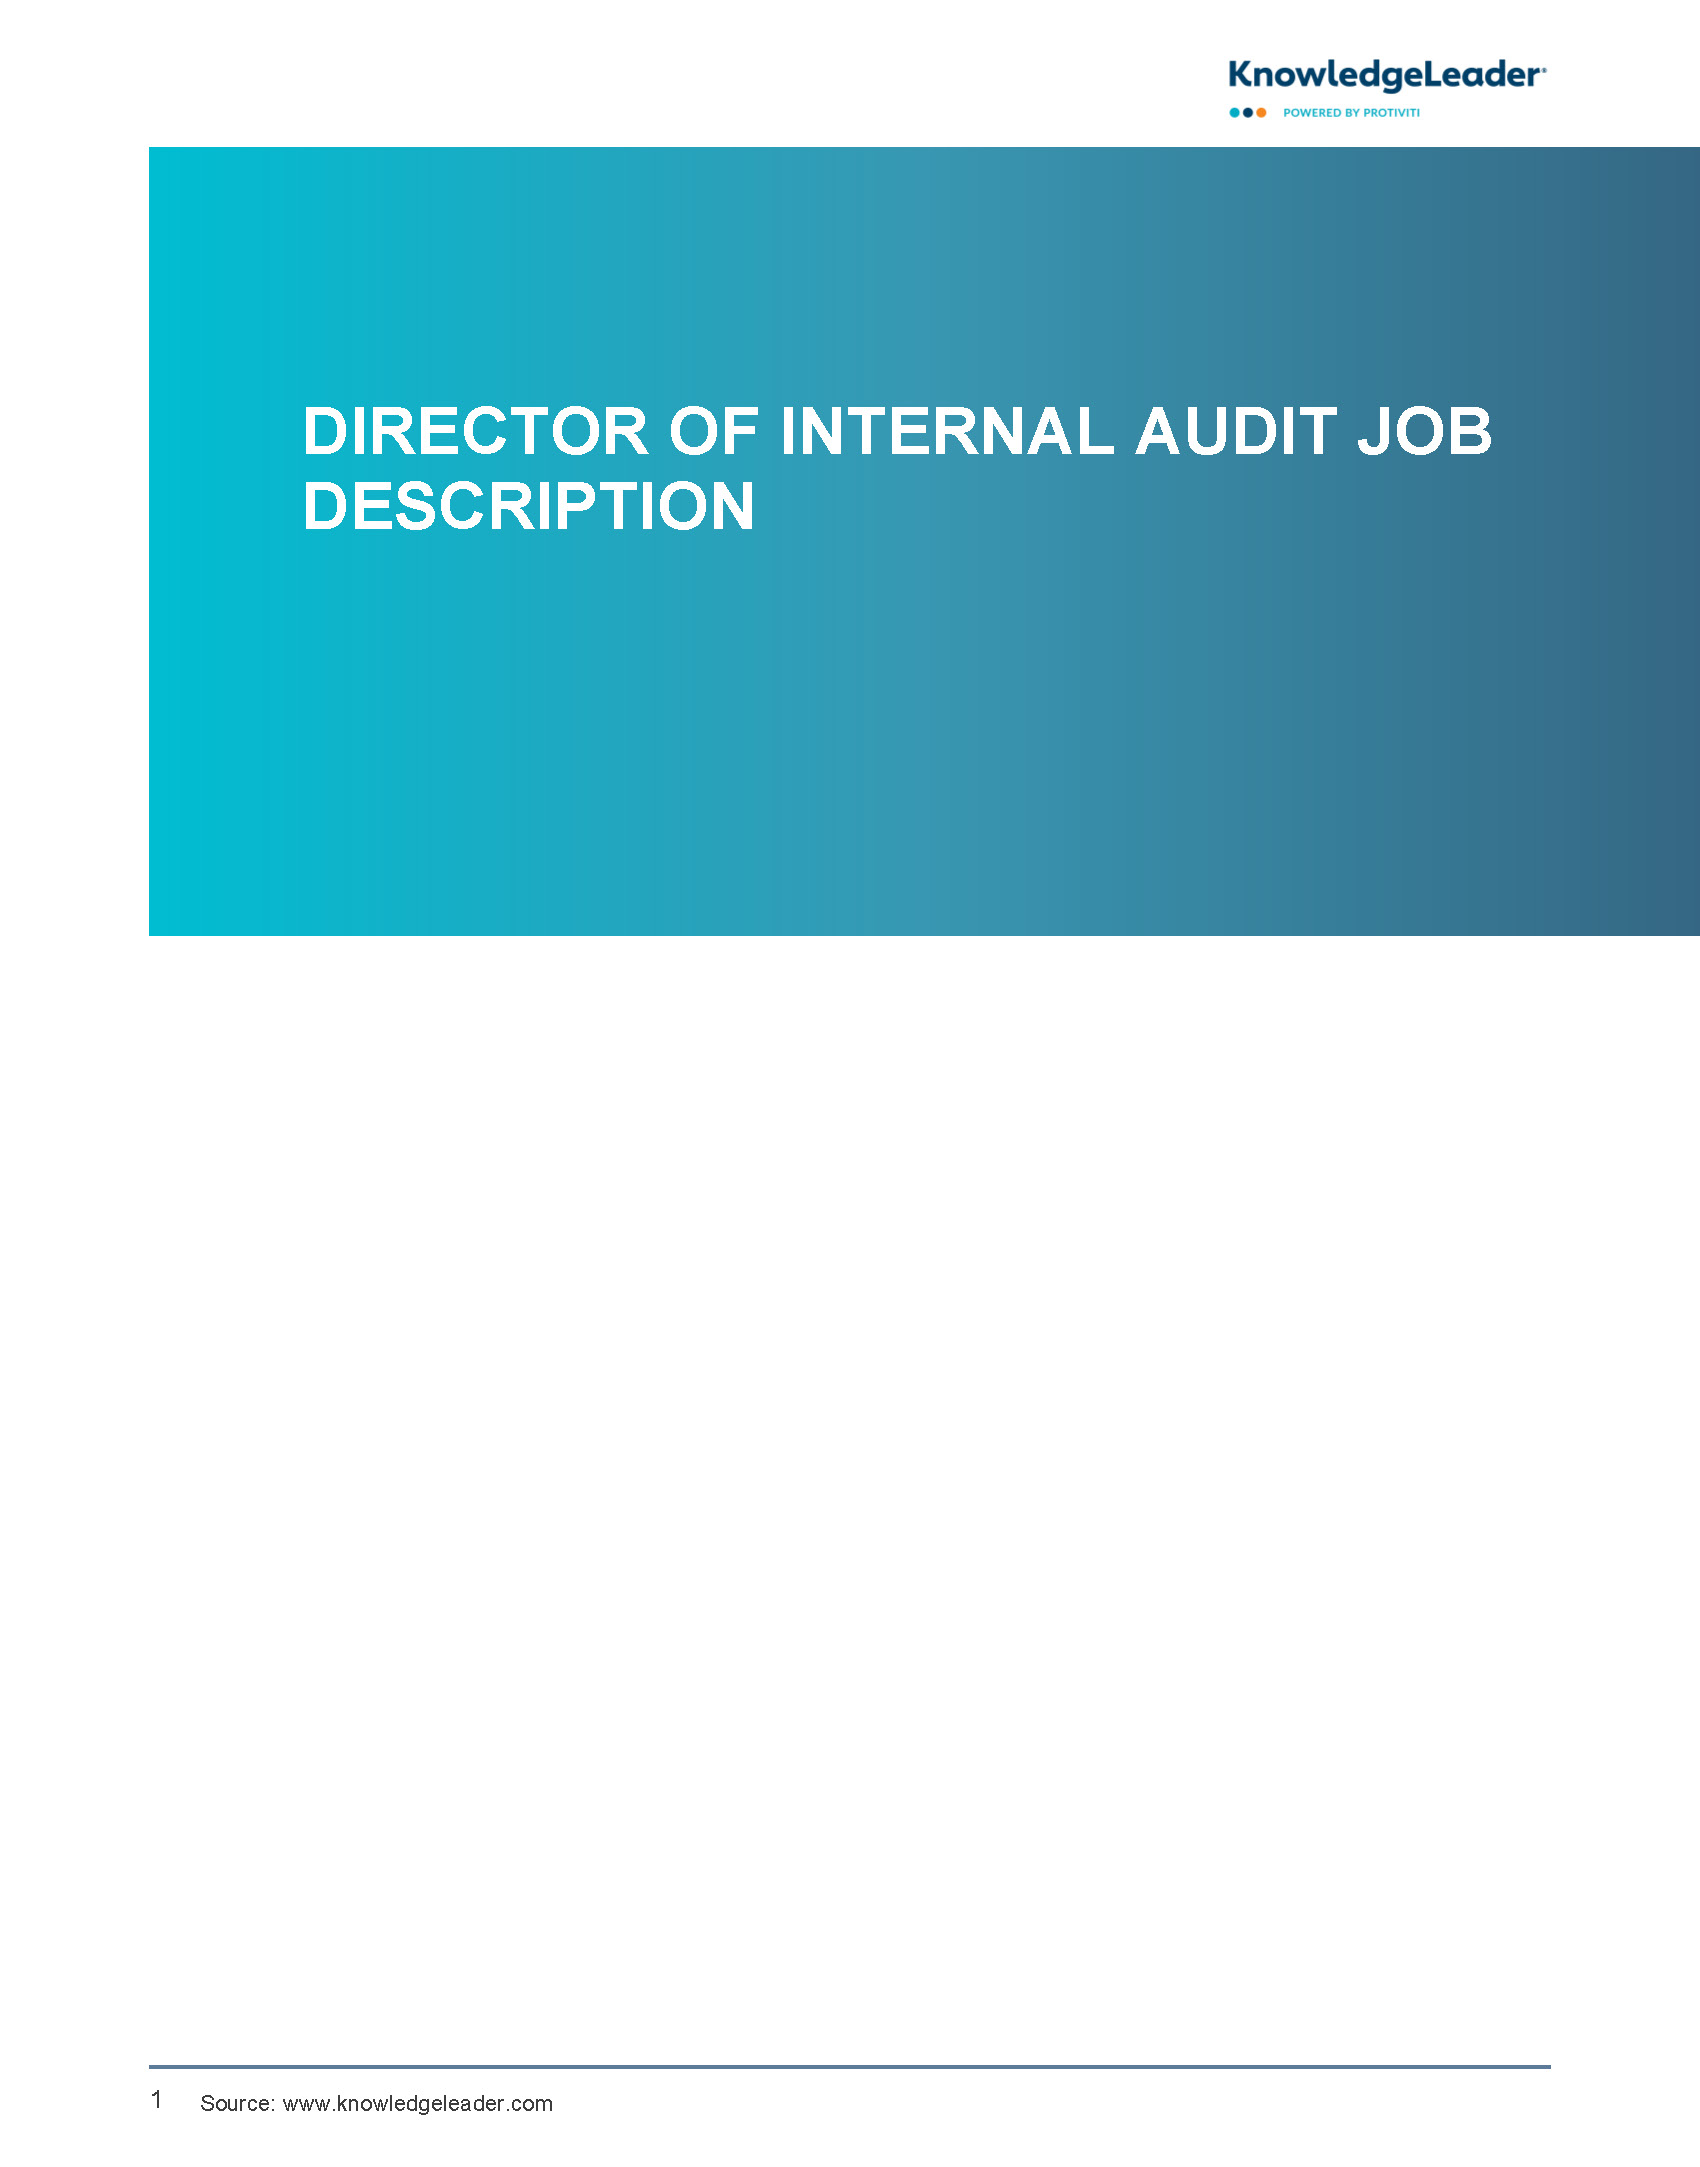 Director of Internal Audit Job Description